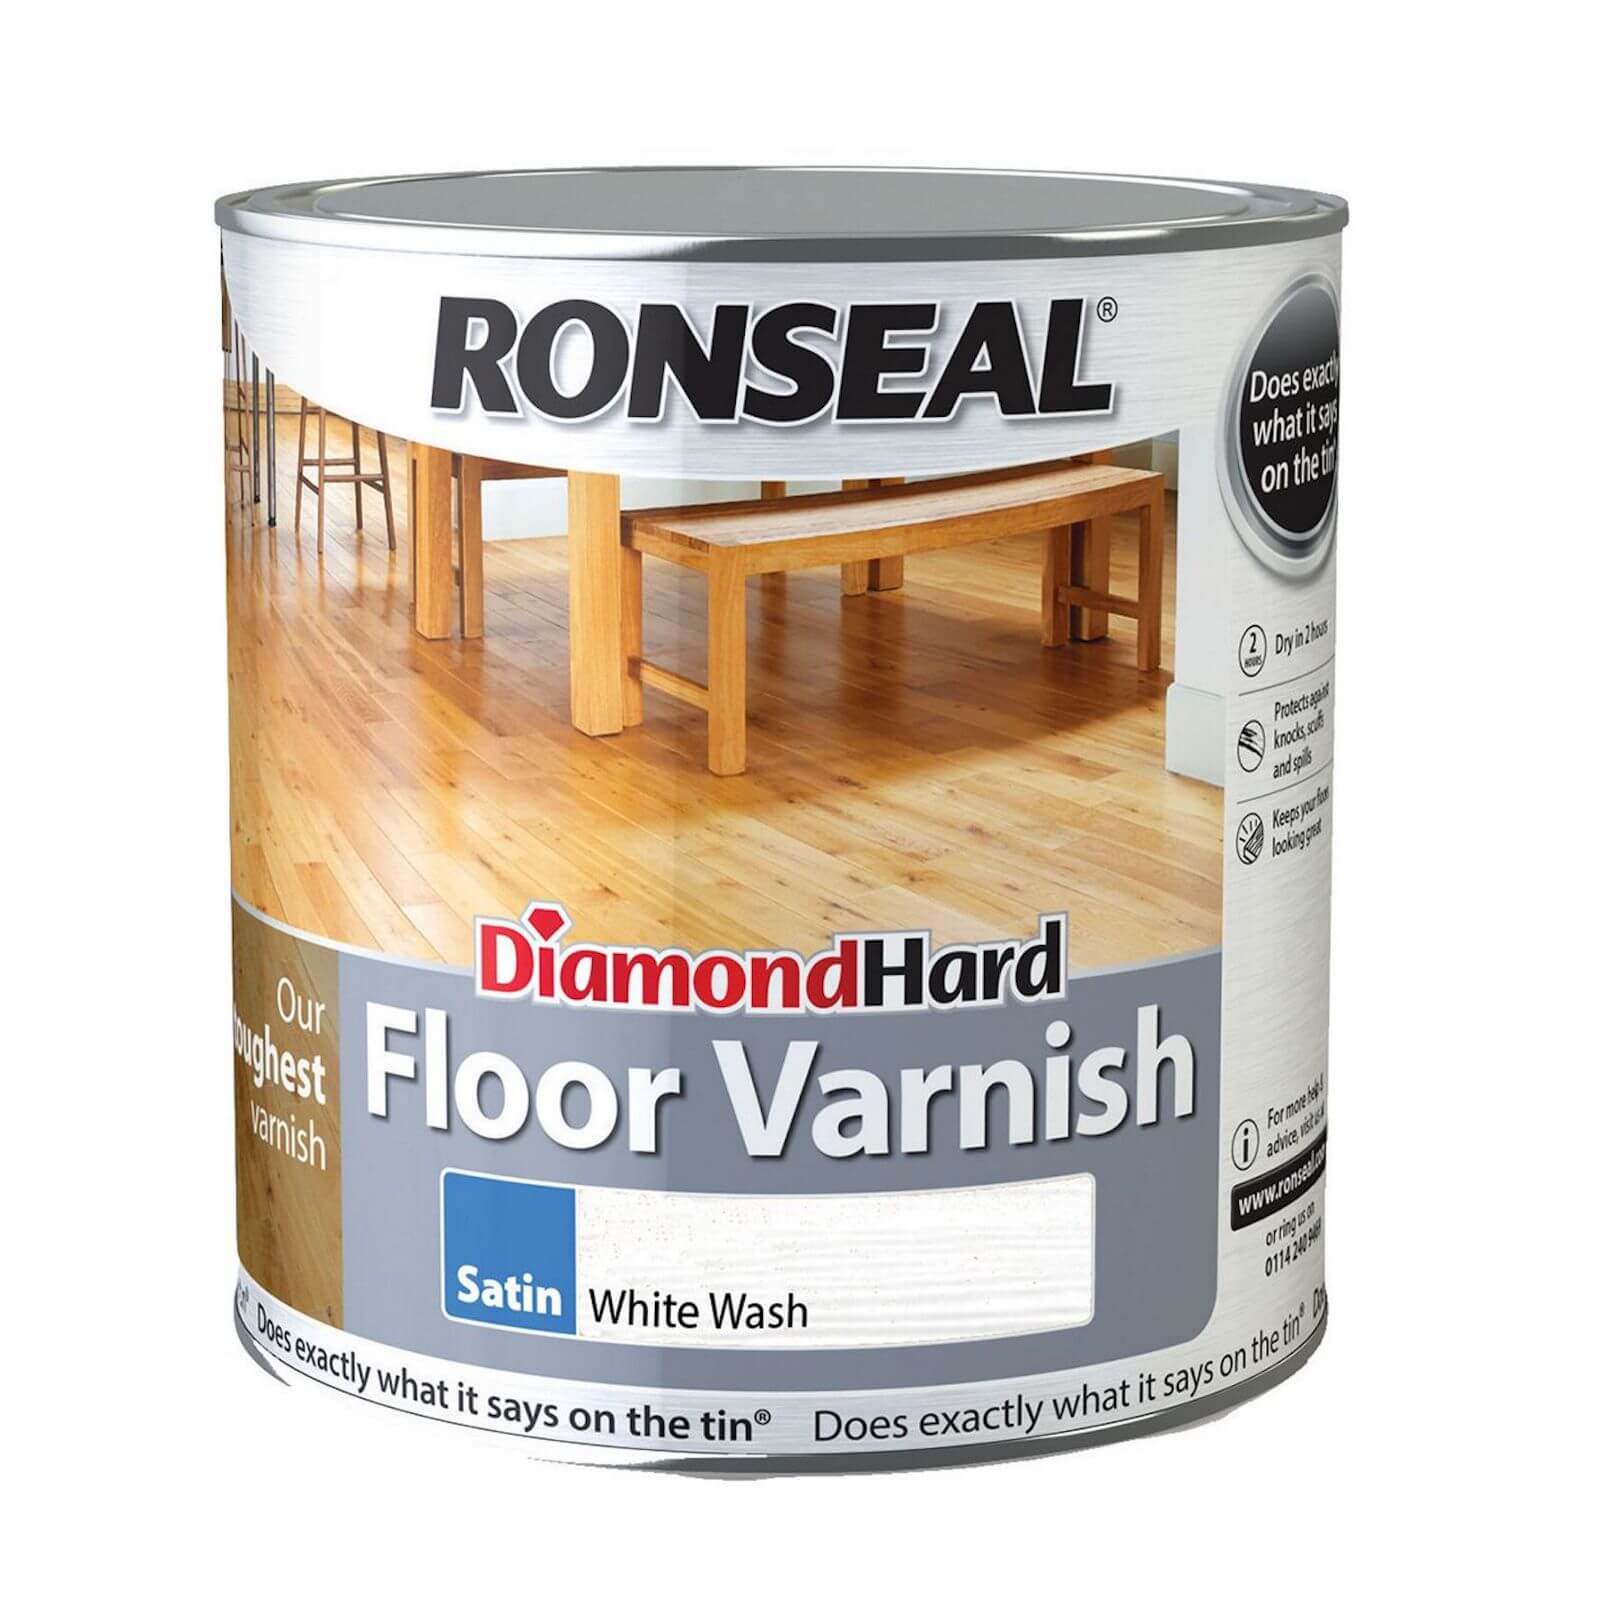 Ronseal Diamond Hard Floor Varnish White Ash - 2.5L